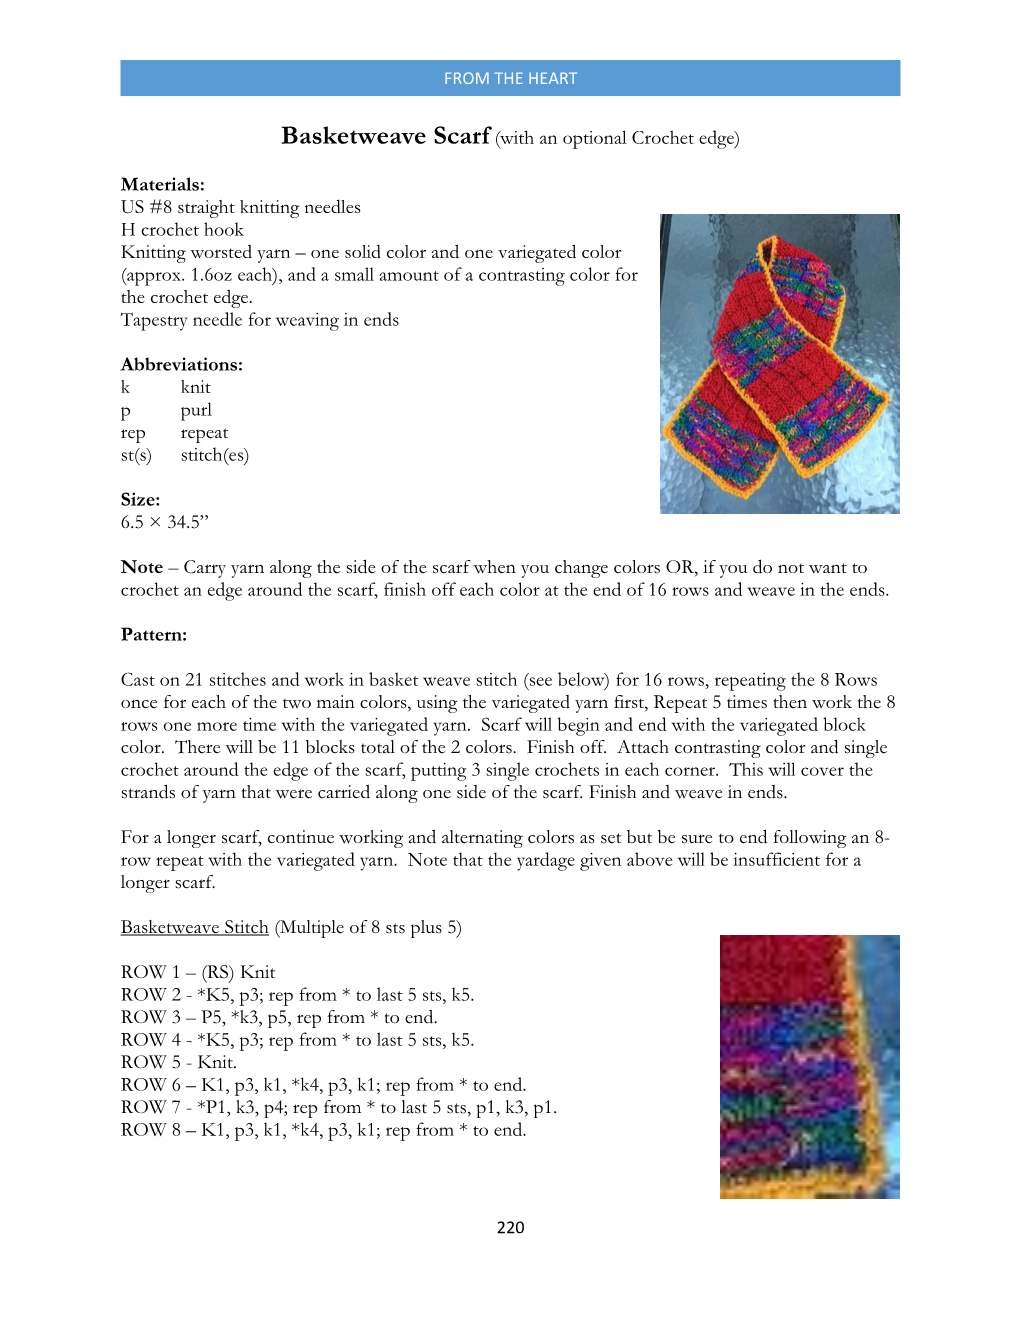 Basketweave Scarf (With an Optional Crochet Edge)